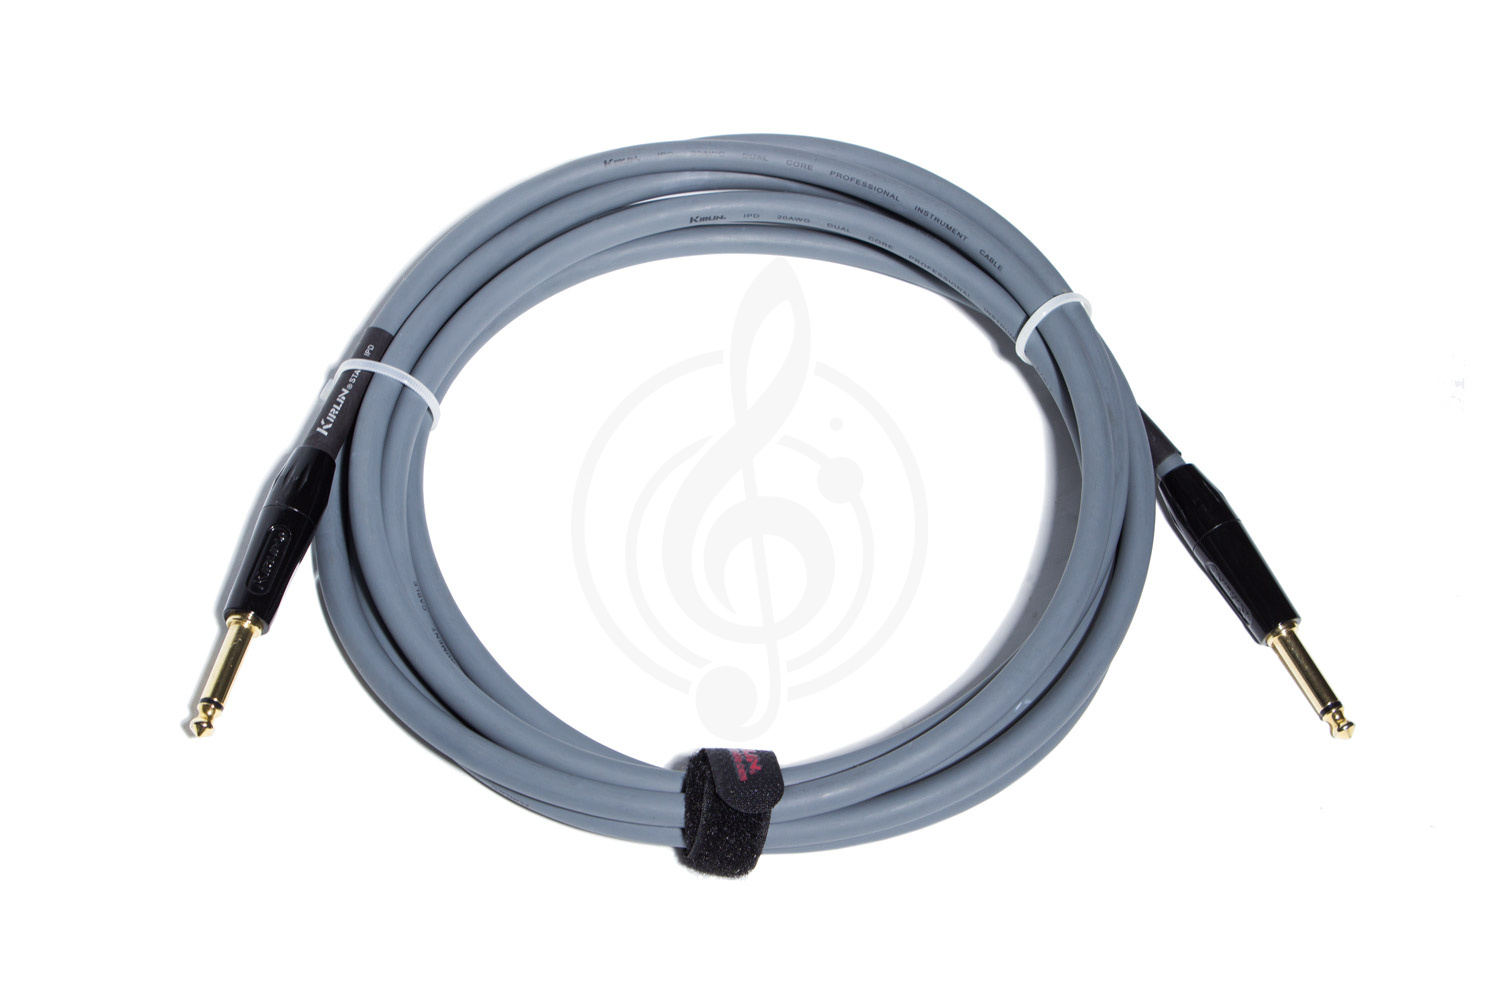  Jack-Jack инструментальный кабель Kirlin Kirlin IM-201-3 GA Инструментальный кабель 3м IM-201-3 GA - фото 2